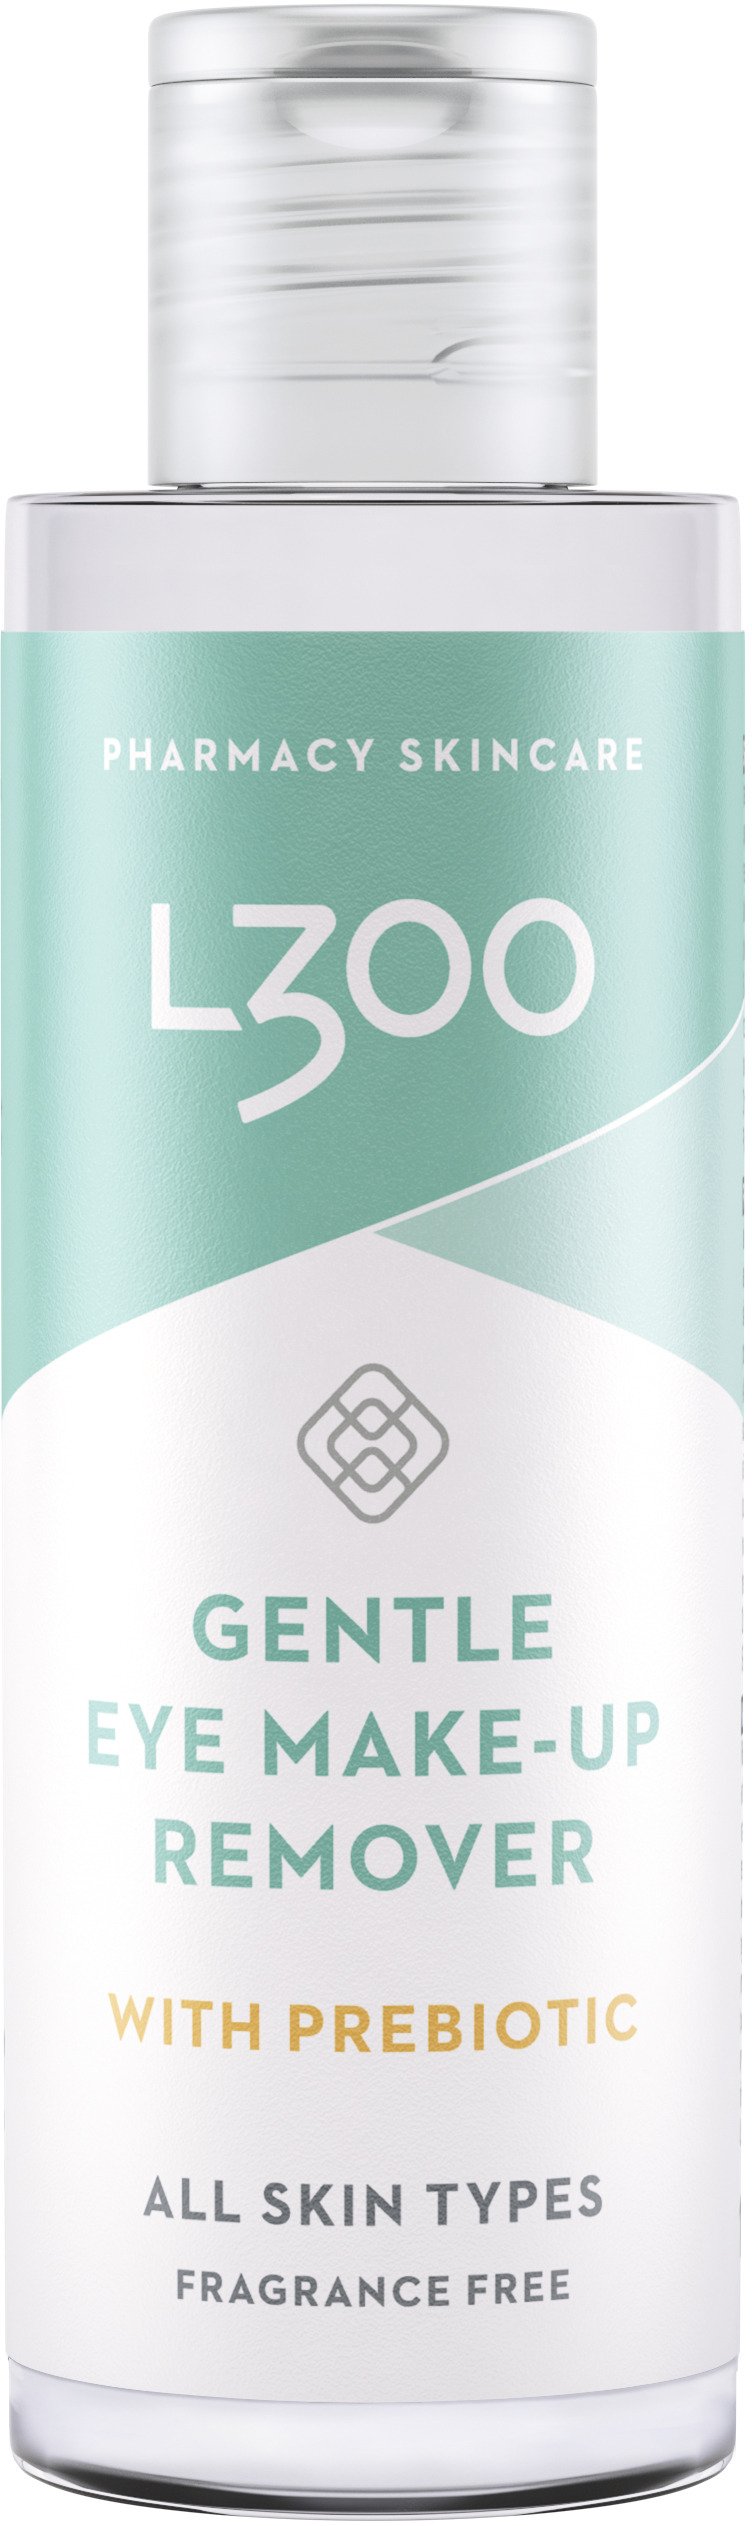 L300 Gentle Eye Make-Up Remover Prebiotic 100 ml